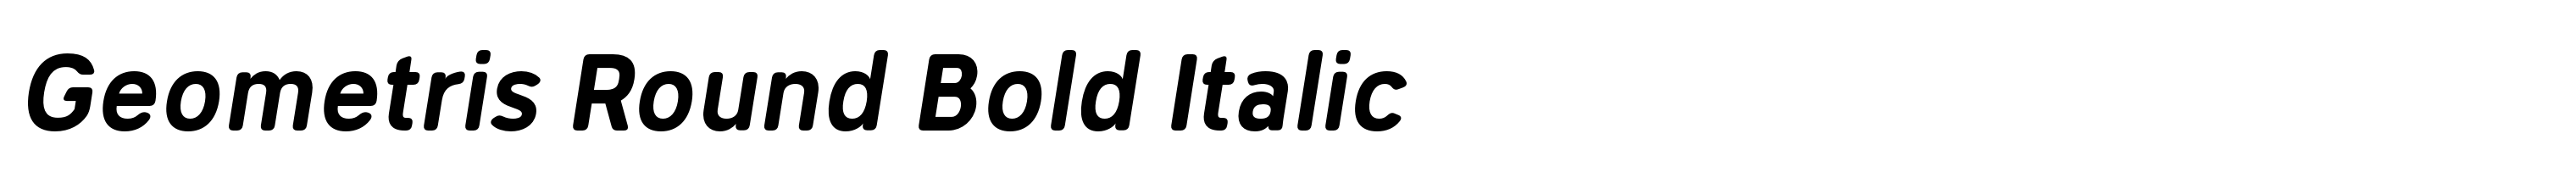 Geometris Round Bold Italic